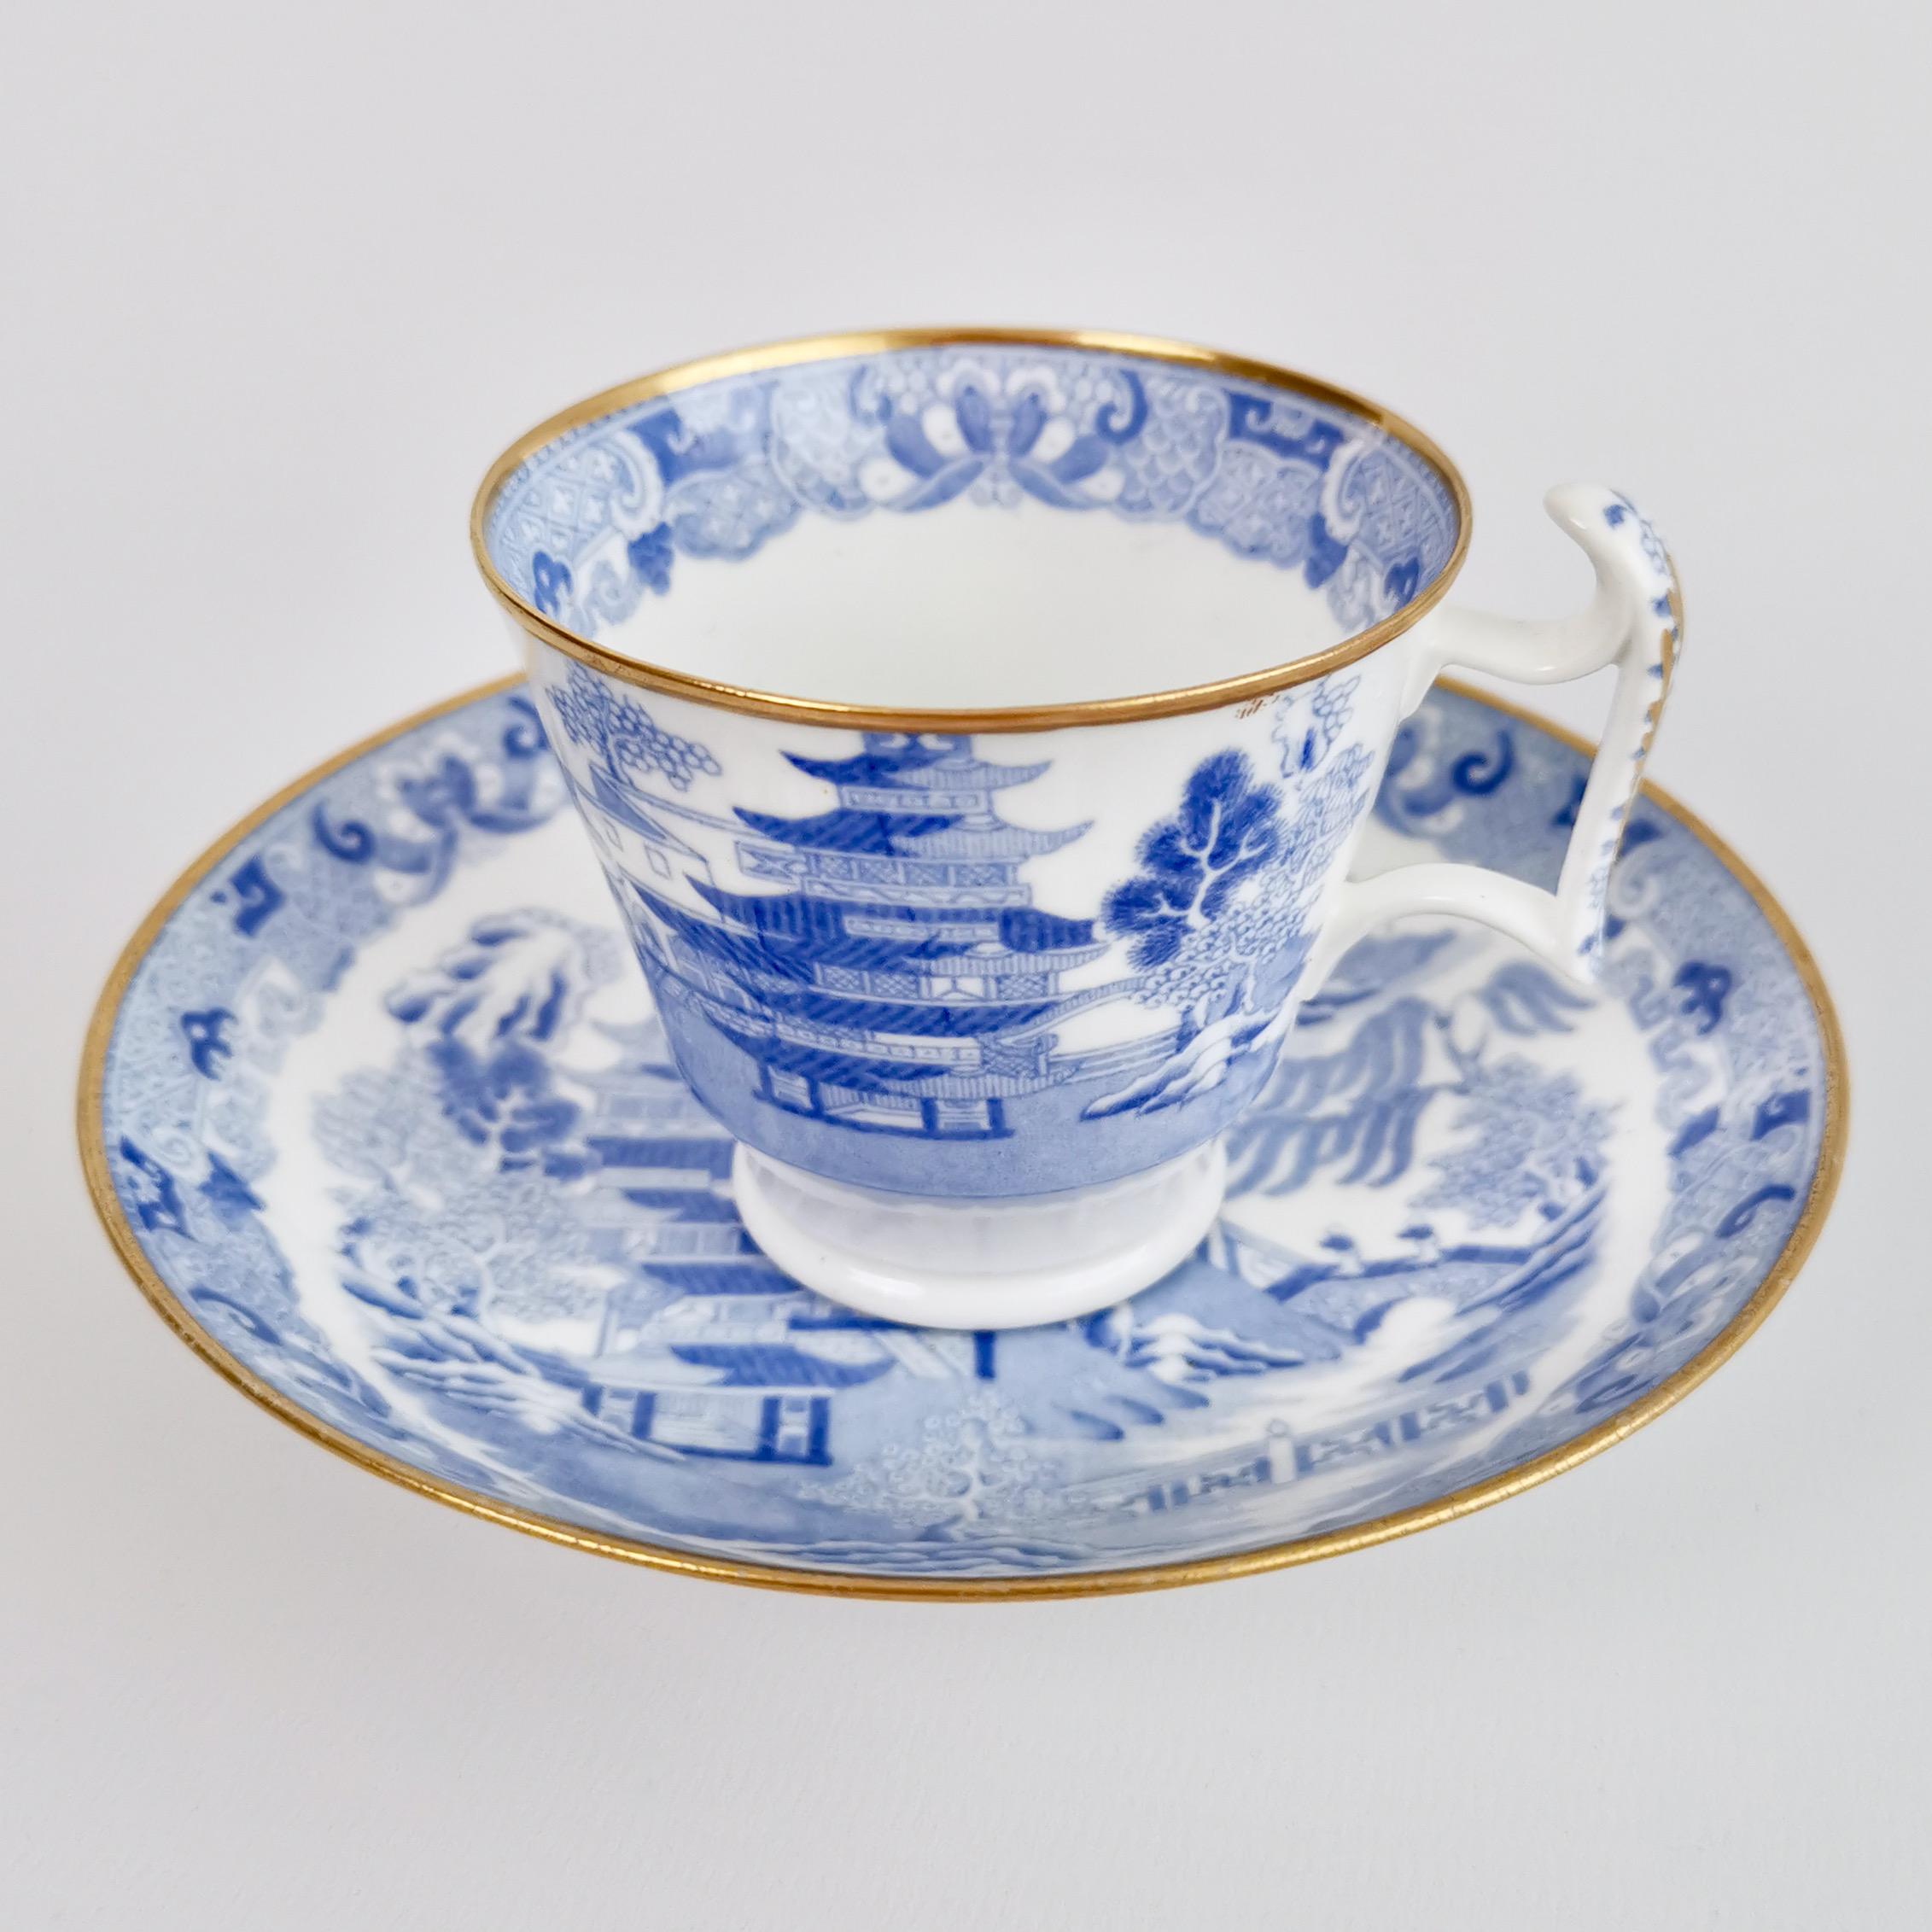 English Spode Porcelain Teacup Trio, Brosely Pagoda Blue and White Transfer, ca 1815